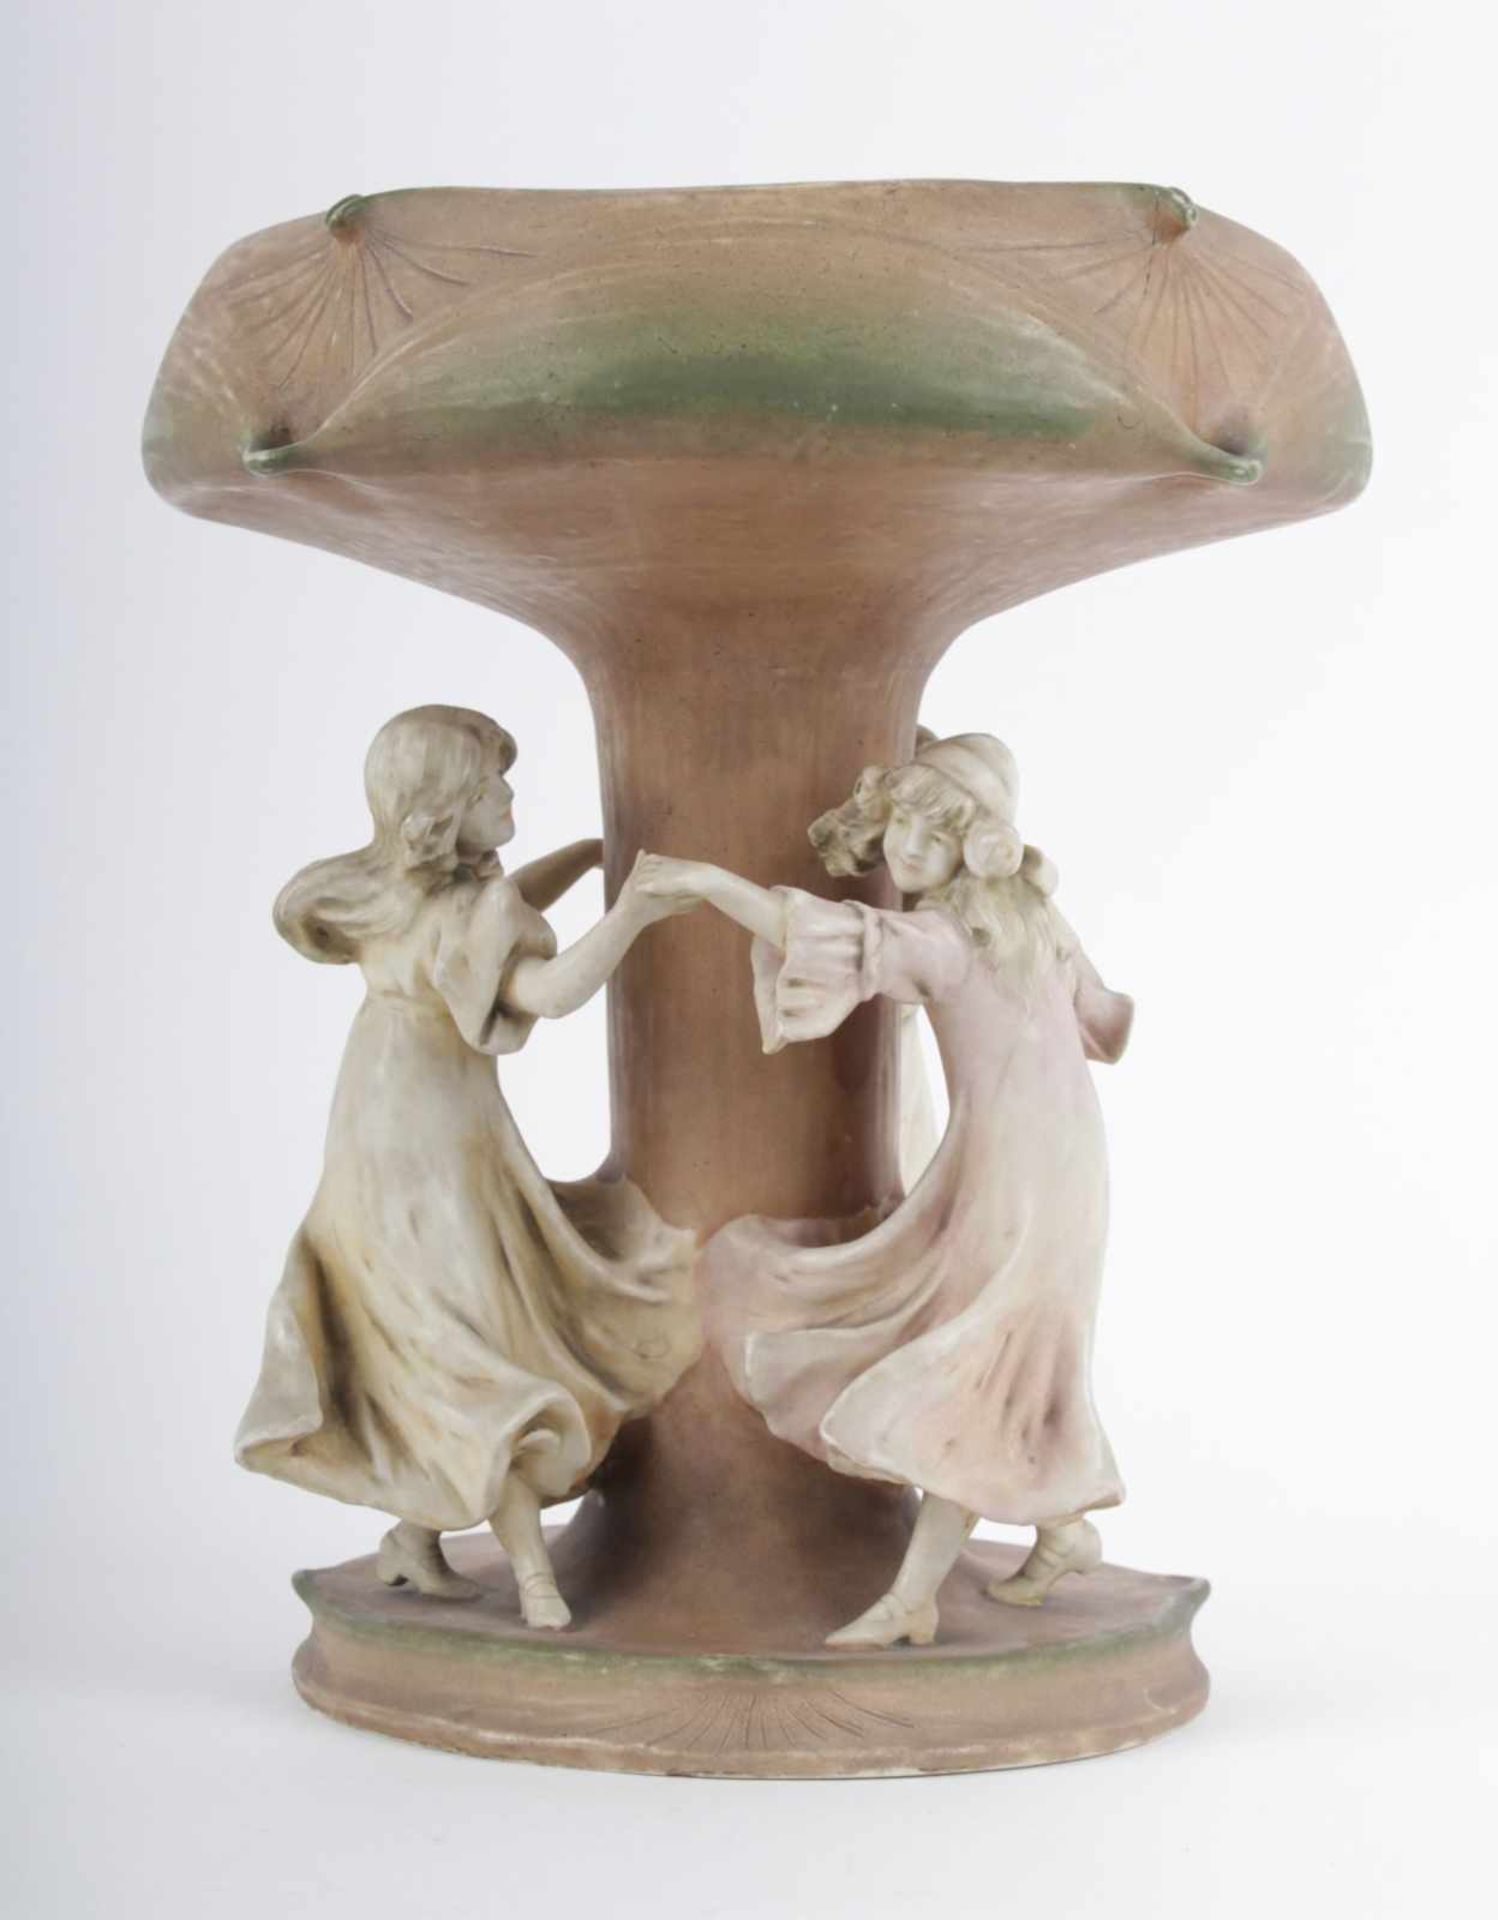 Trnovany Art Nouveau Bowl Amphora Ernst Wahliss, Trnovany near Teplice (Bohemia), pottery, decorated - Bild 2 aus 7